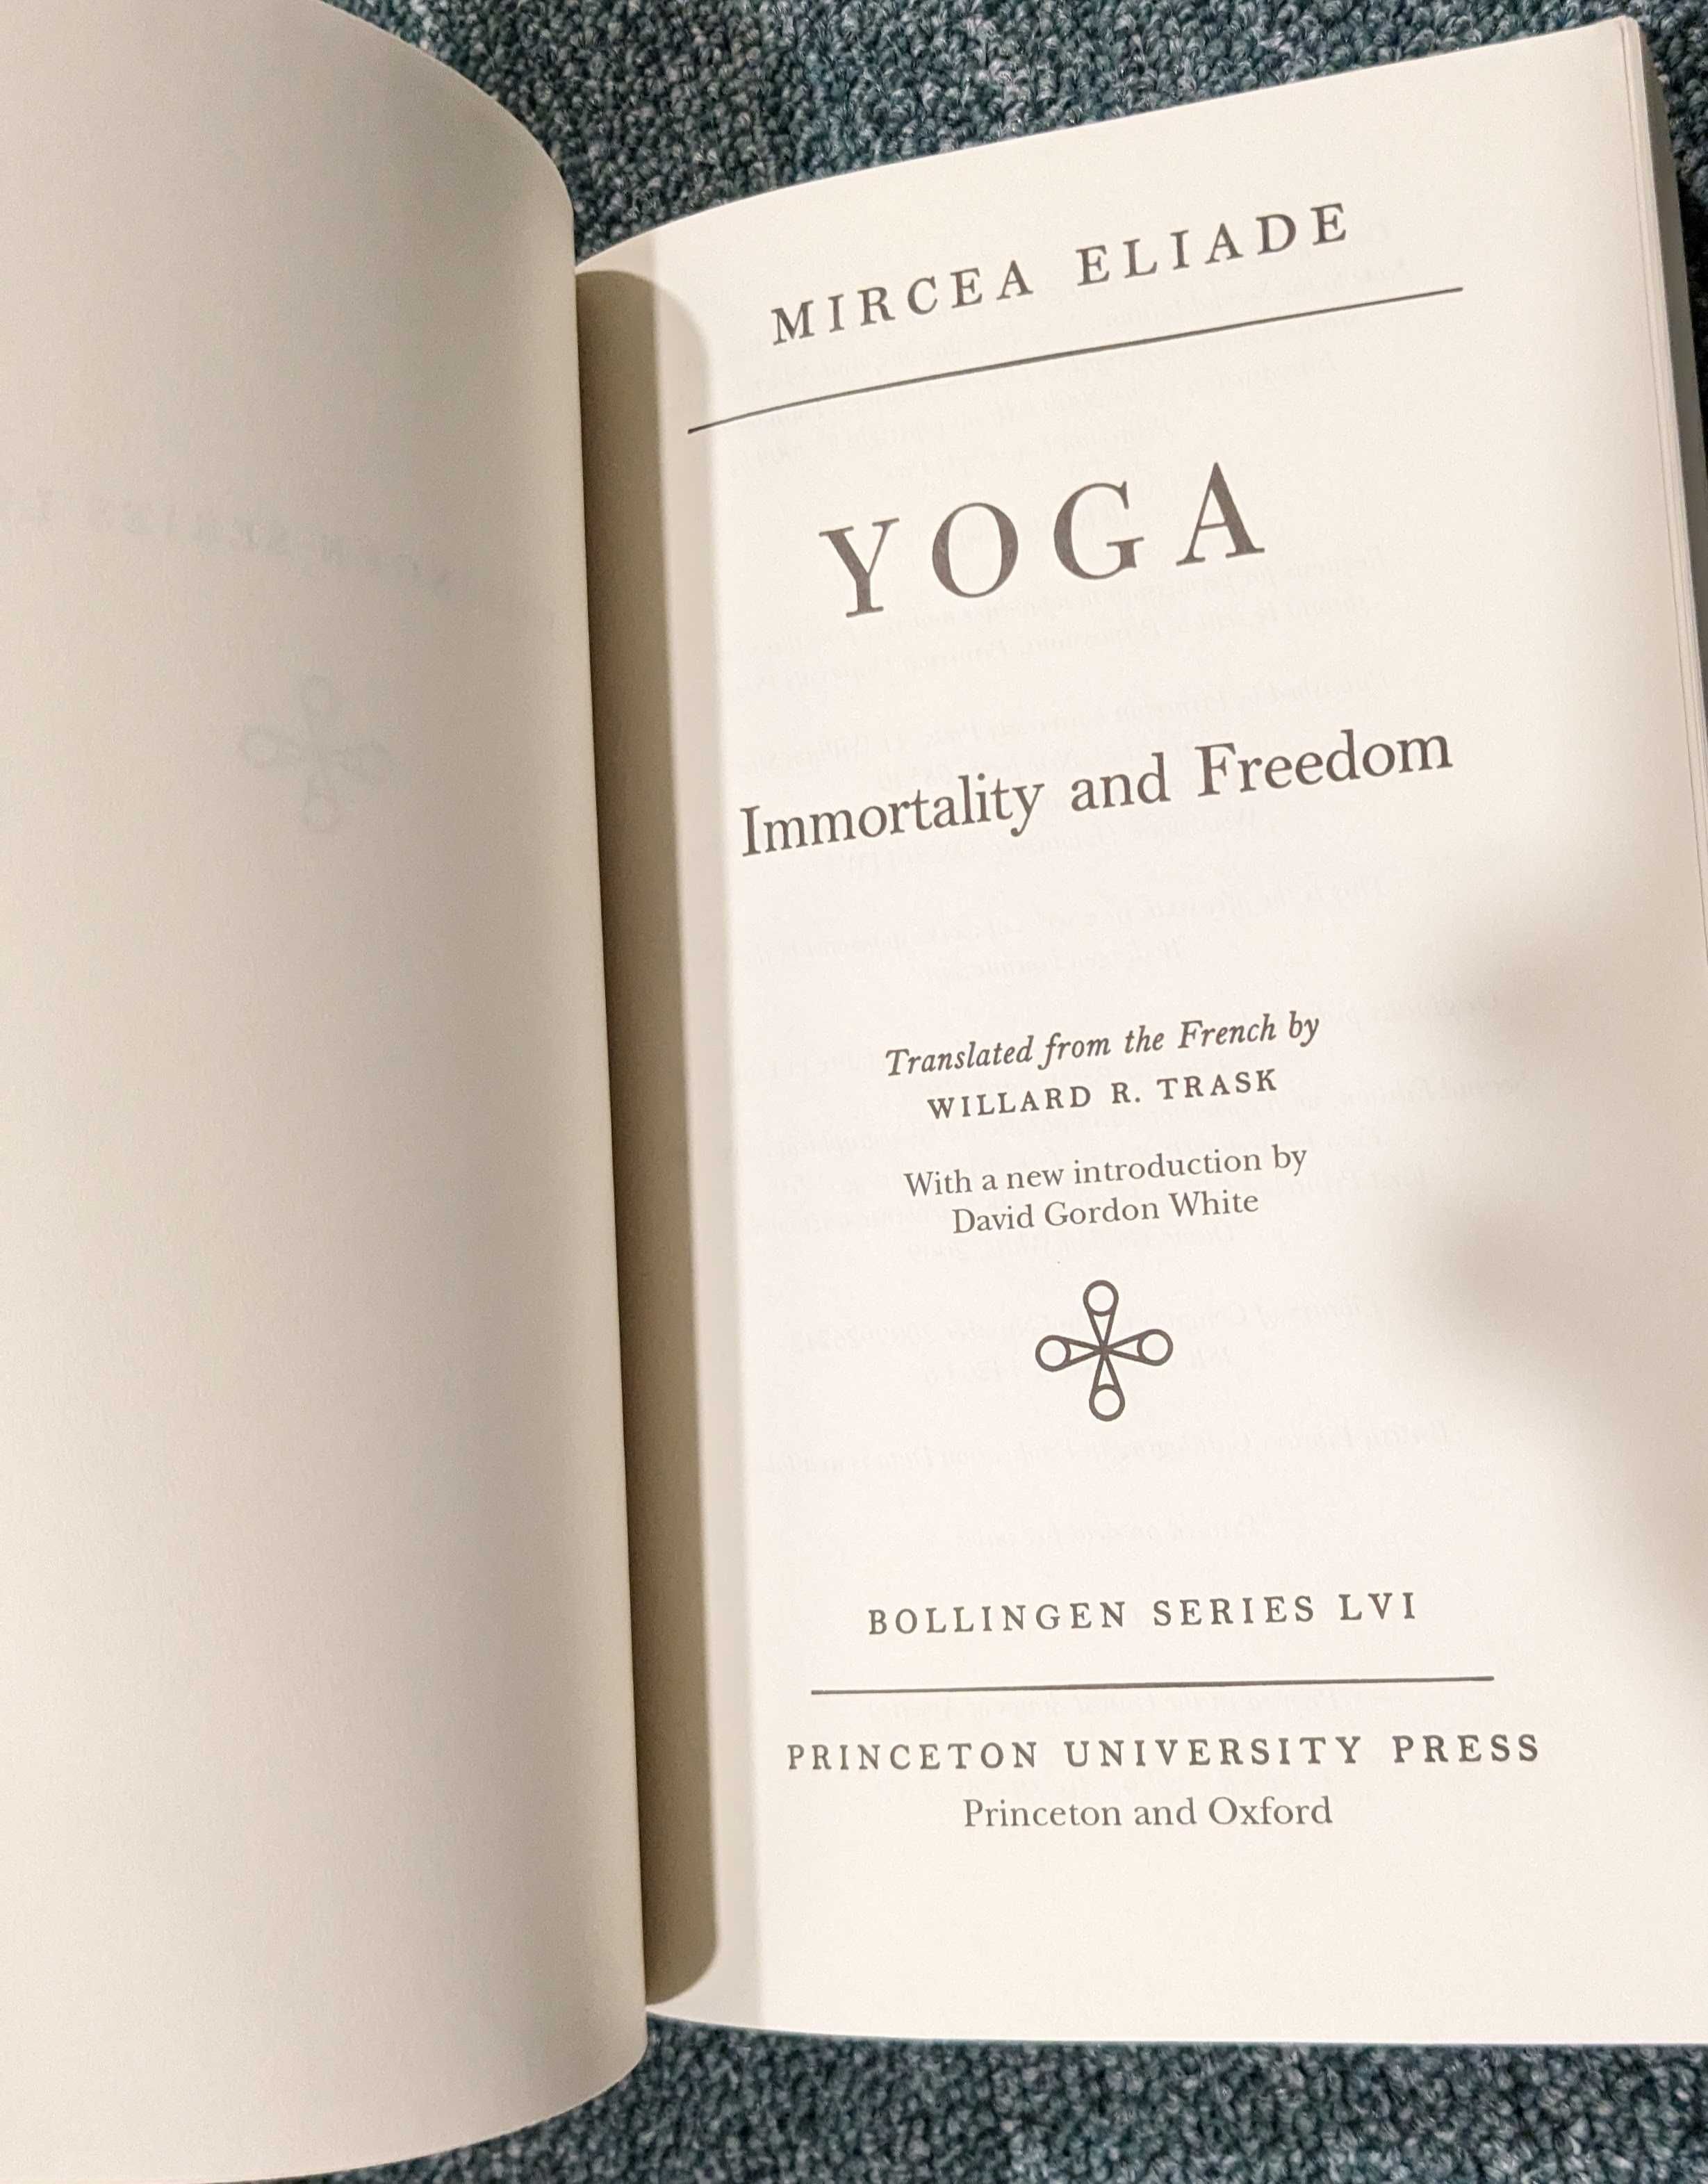 Yoga: Immortality and Freedom - Mircea Eliade